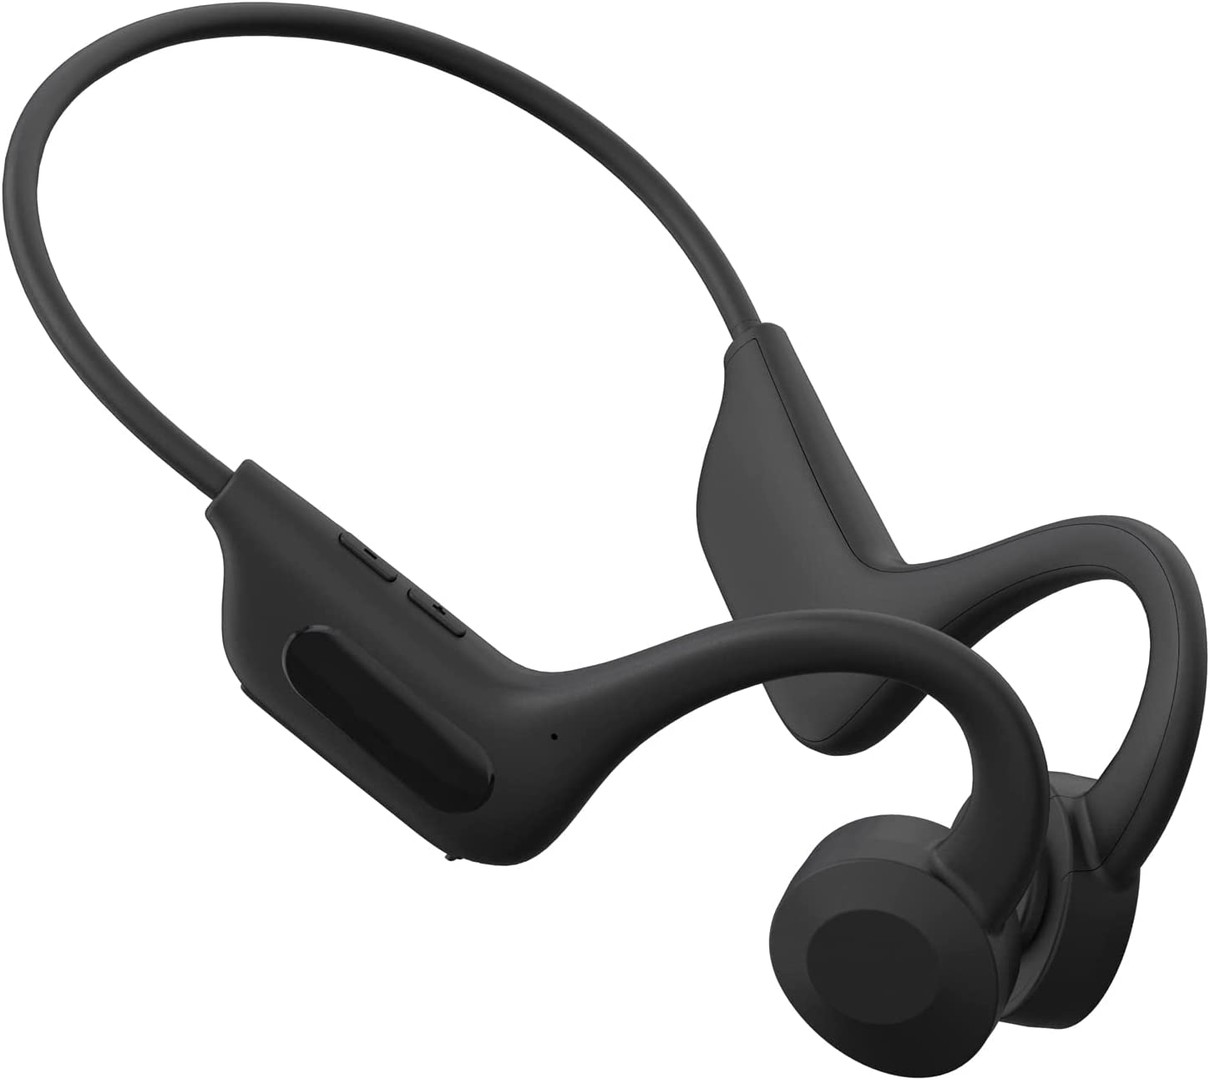 accesorios para electronica - Auriculares de oído abierto, inalámbricos, Bluetooth, audifonos, conducción 